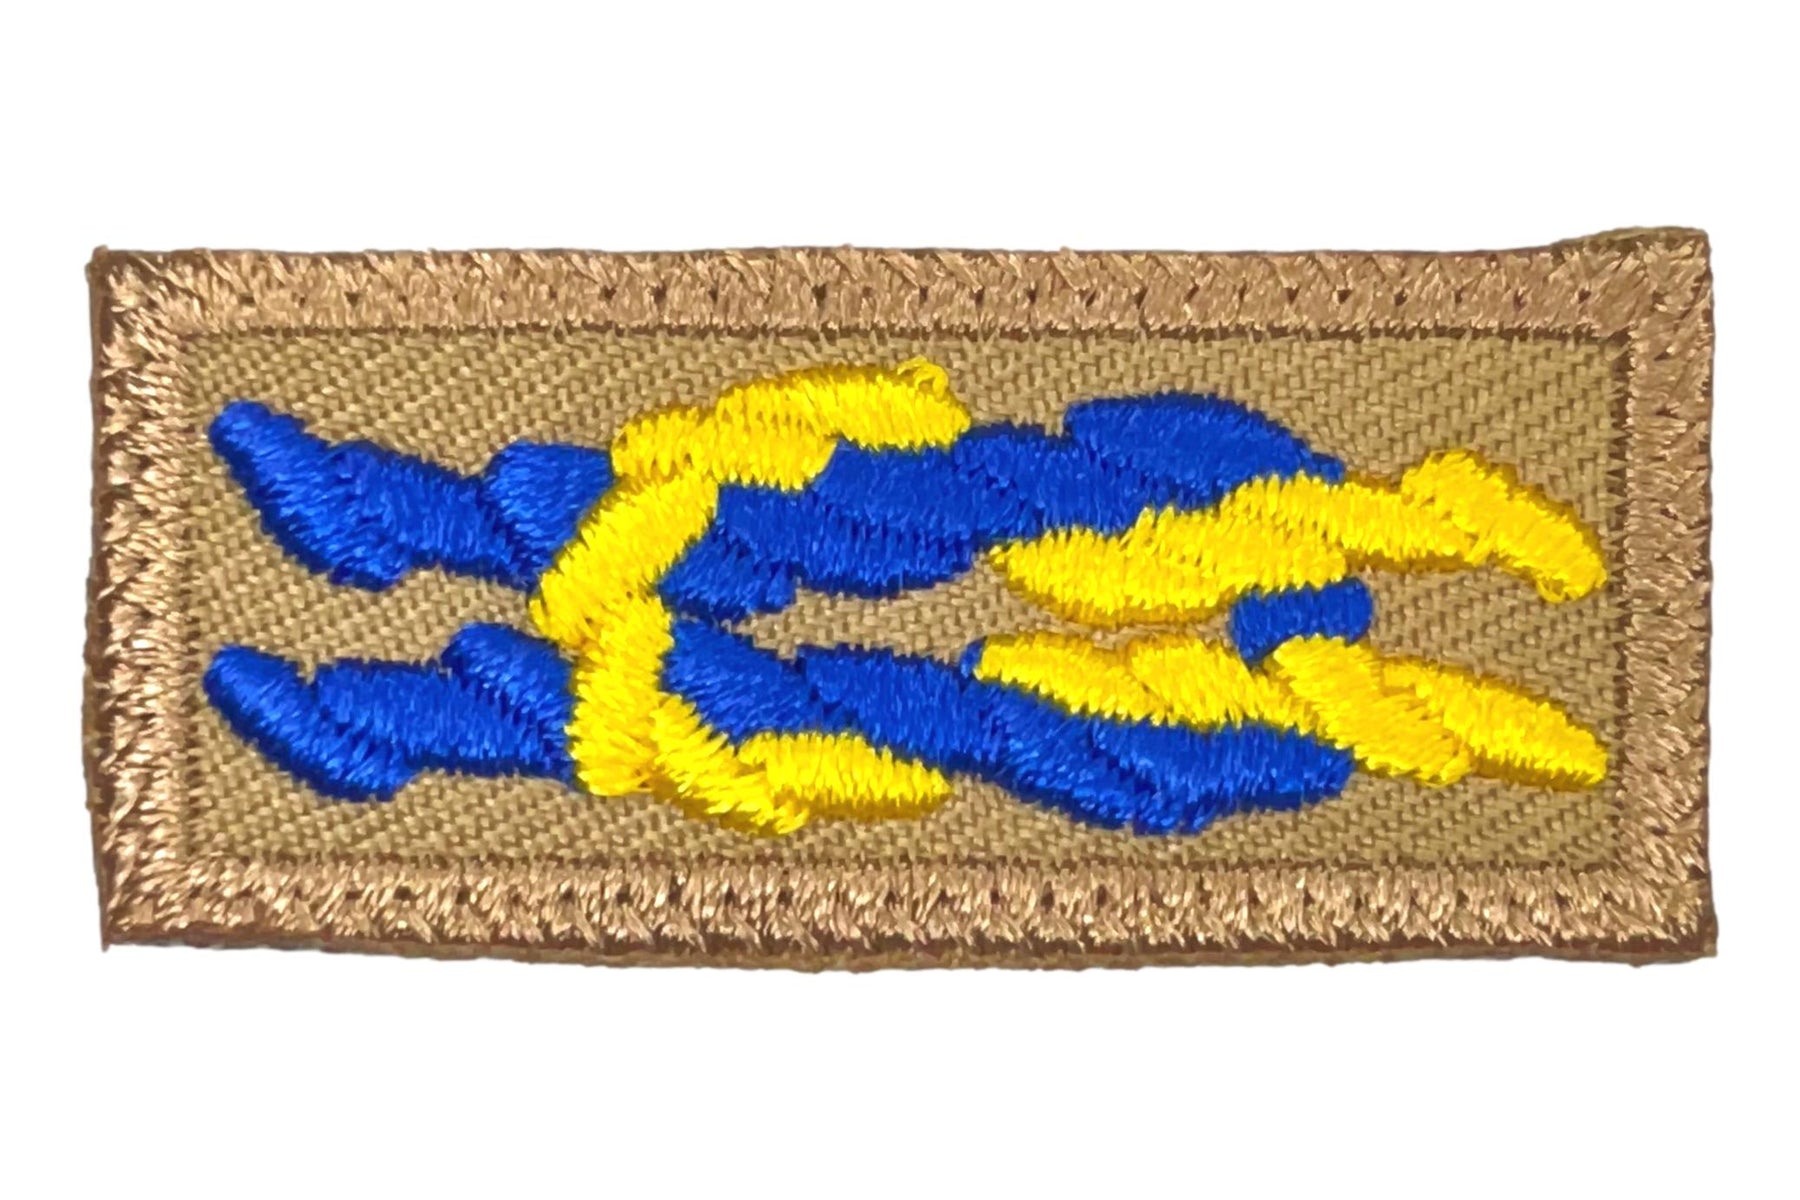 Medal of Merit Award Knot on Tan